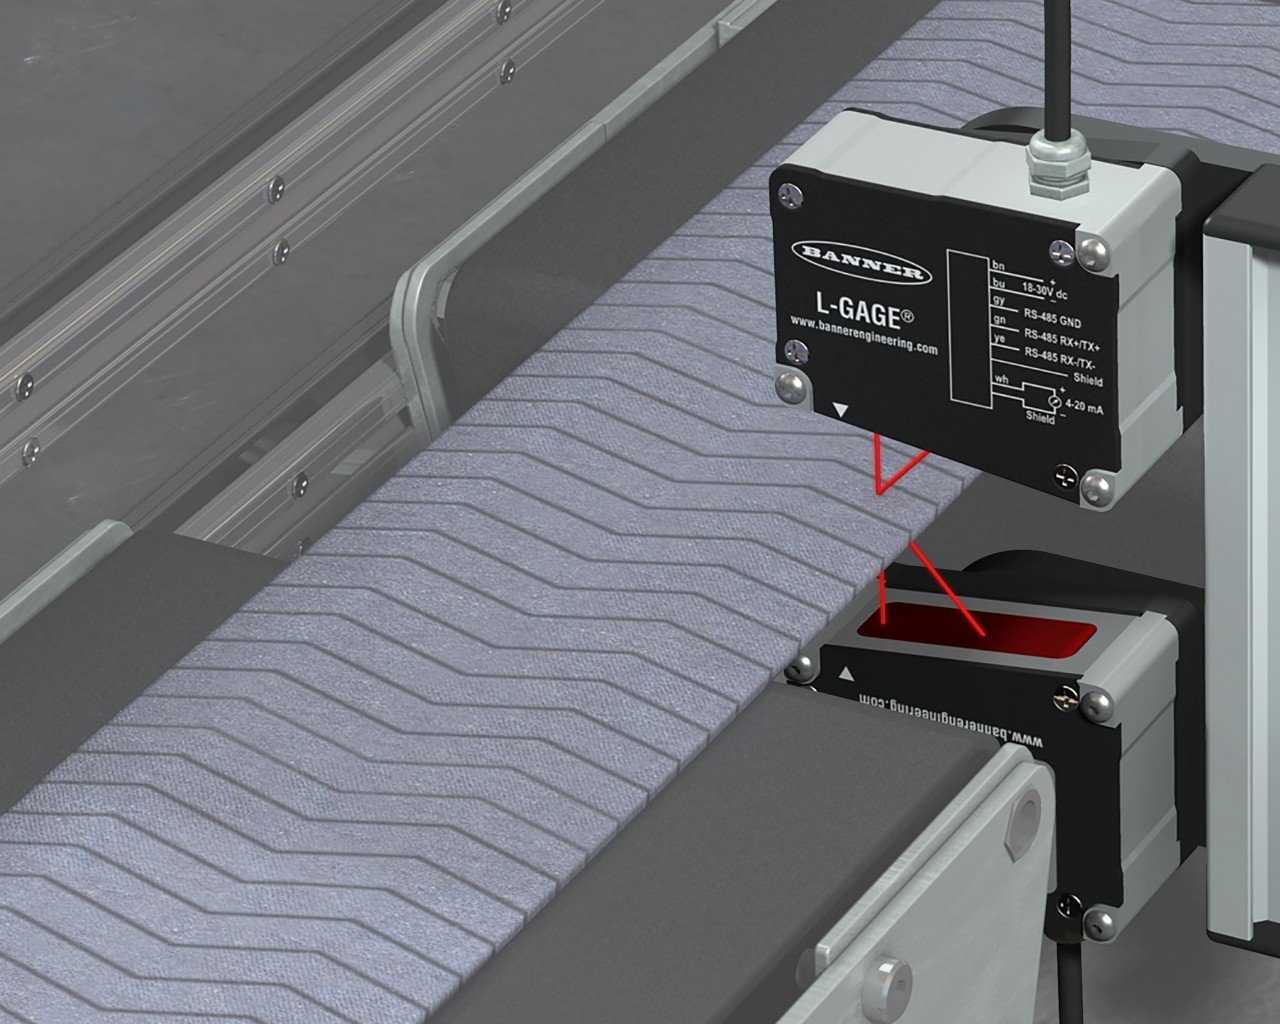 measuring-wear-patterns-on-conveyor-belts.img